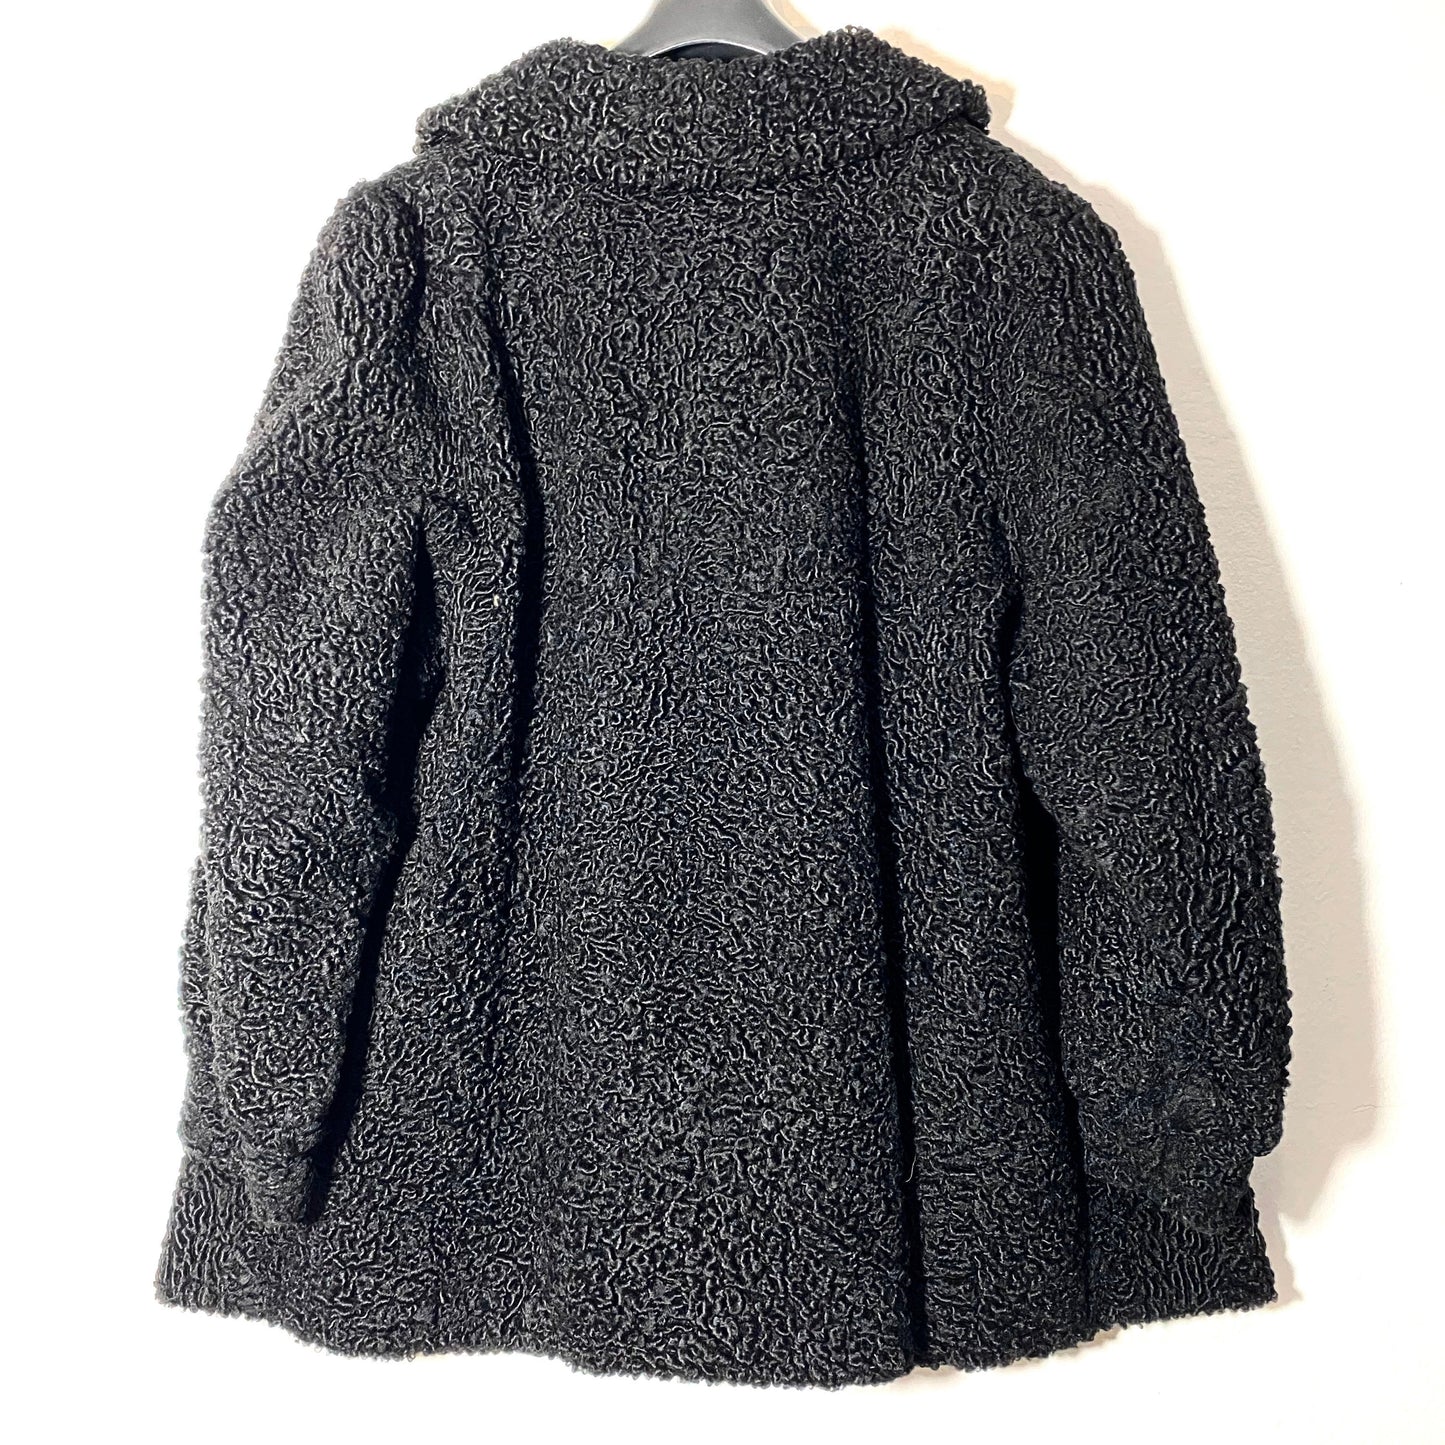 1960s Black astrakan coat made in Italy, finest quality artisanal make, beautiful minimal cut still in fashion.